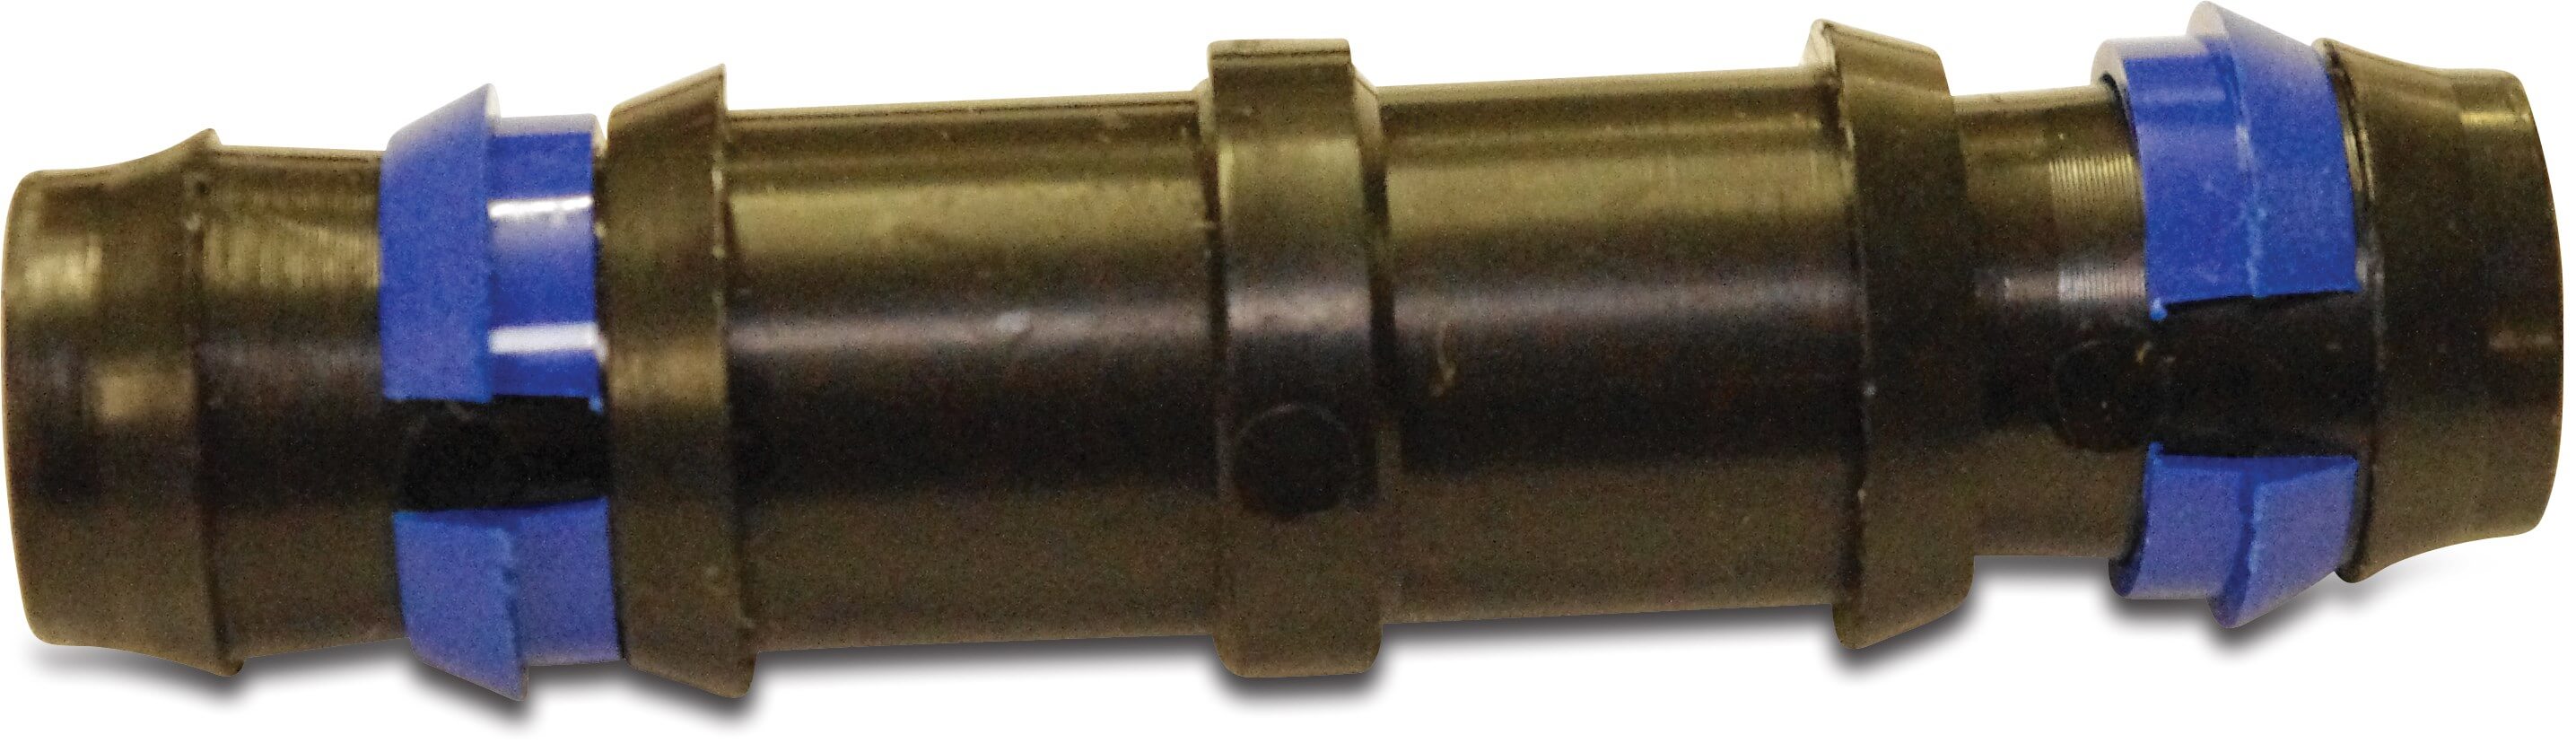 Barbed connector PP 16 mm barbed 6bar black type safety